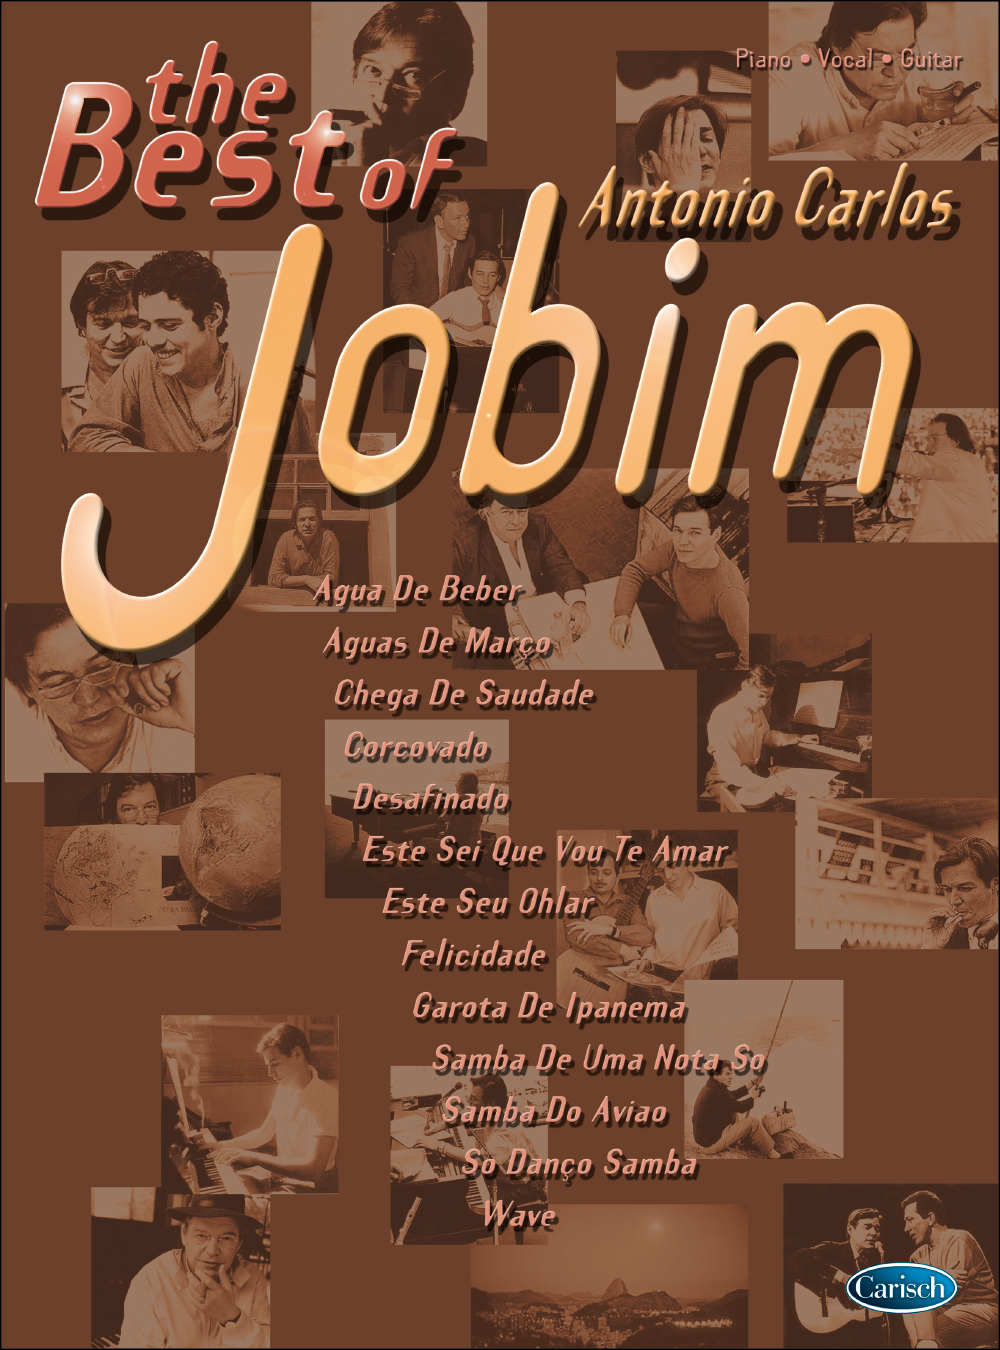 Antonio Carlos Jobim: The Best Of Antonio Carlos Jobim: Piano  Vocal  Guitar: